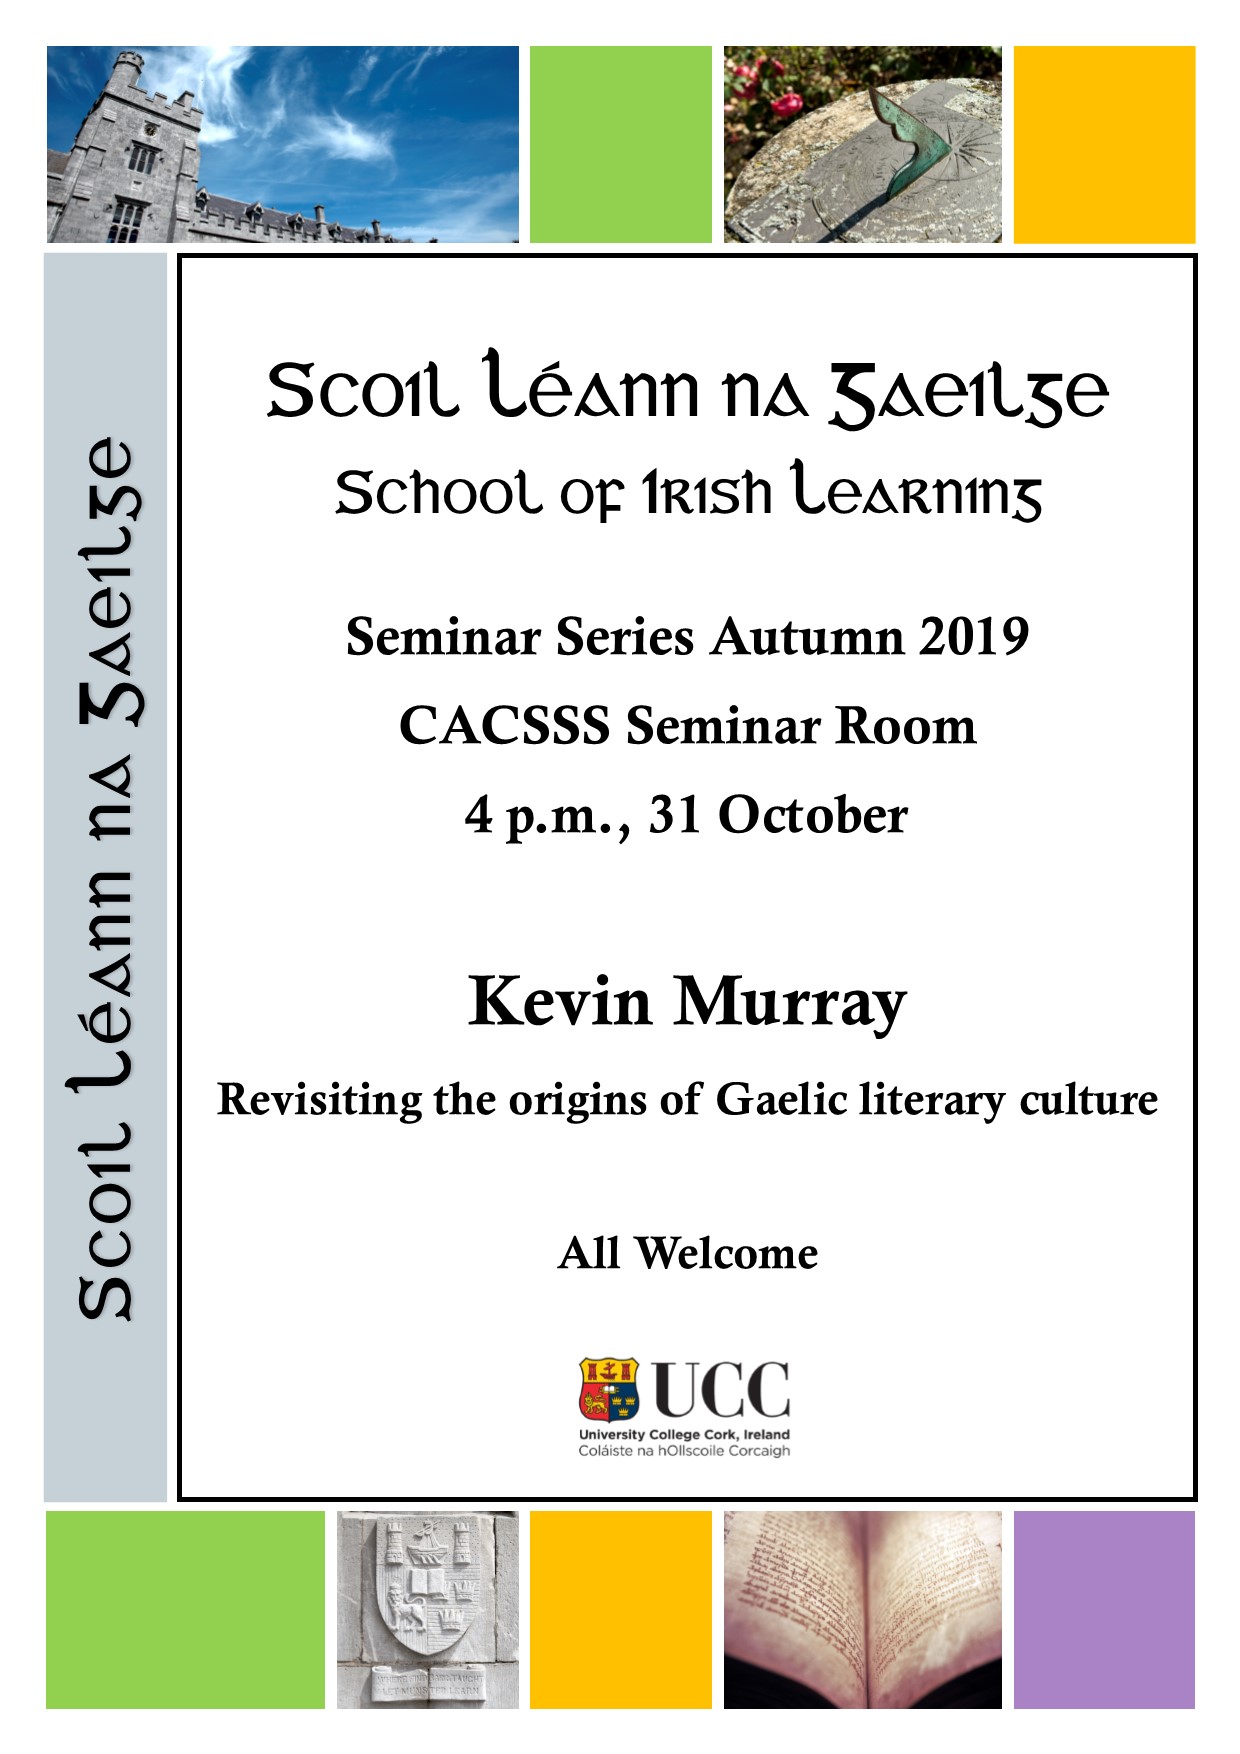 School of Irish Learning Seminar Series